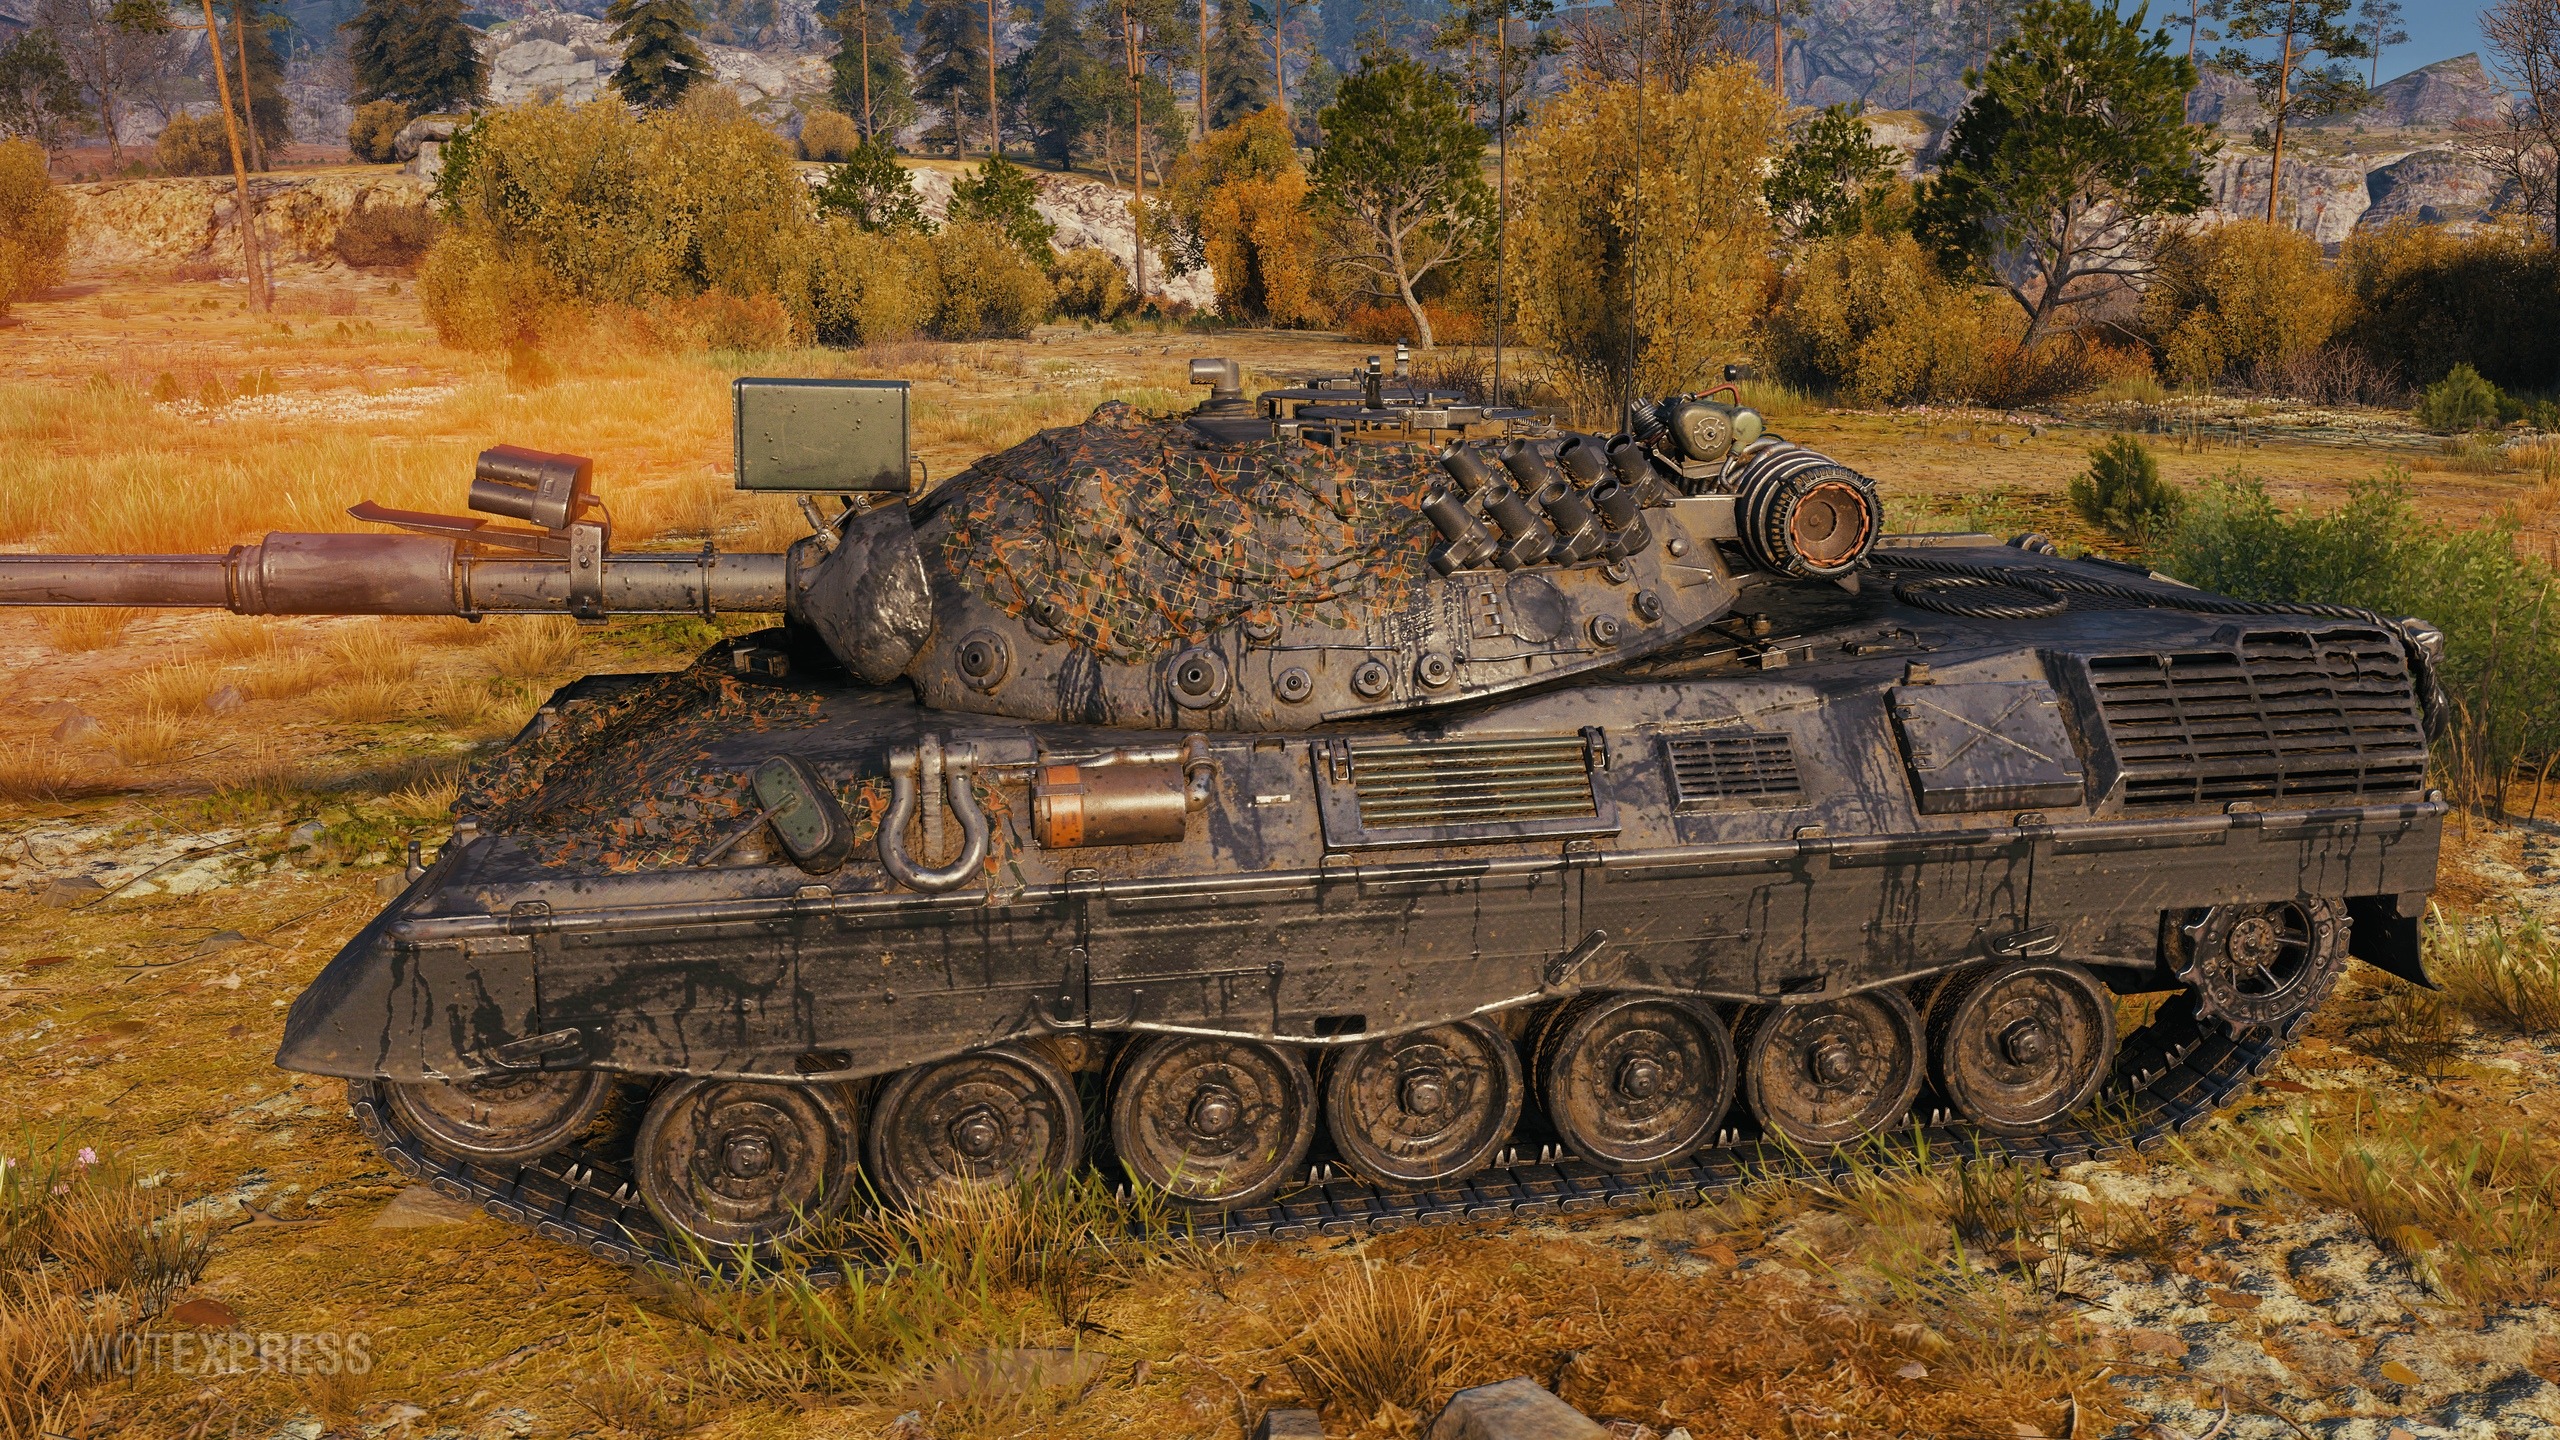 Wot d. Танк леопард 1а5. Блицлихт на танк Leopard 1. Леопард 1 World of Tanks. Леопард танк ворлд оф танк.